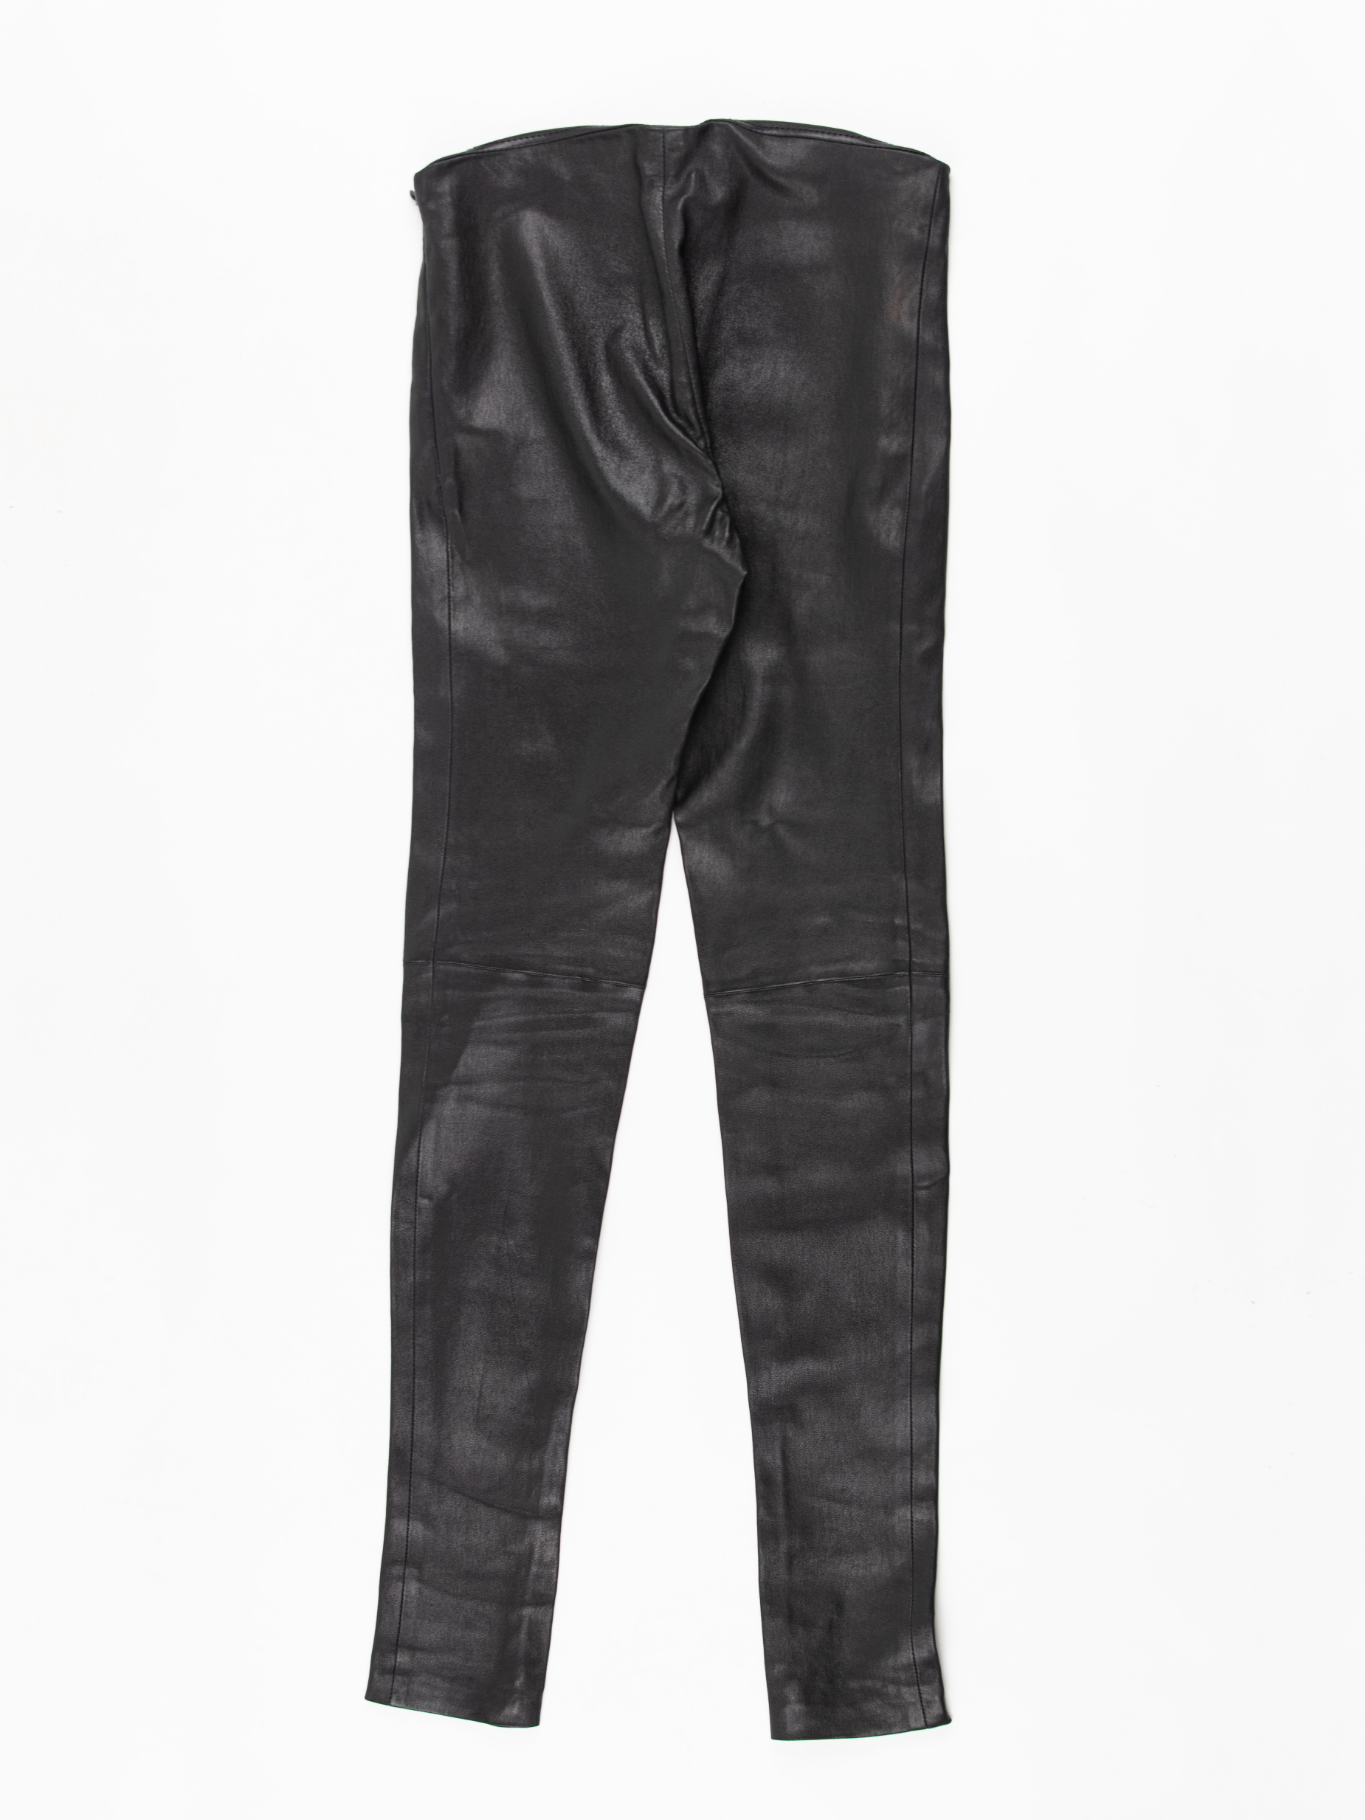 Leather Zip Pants